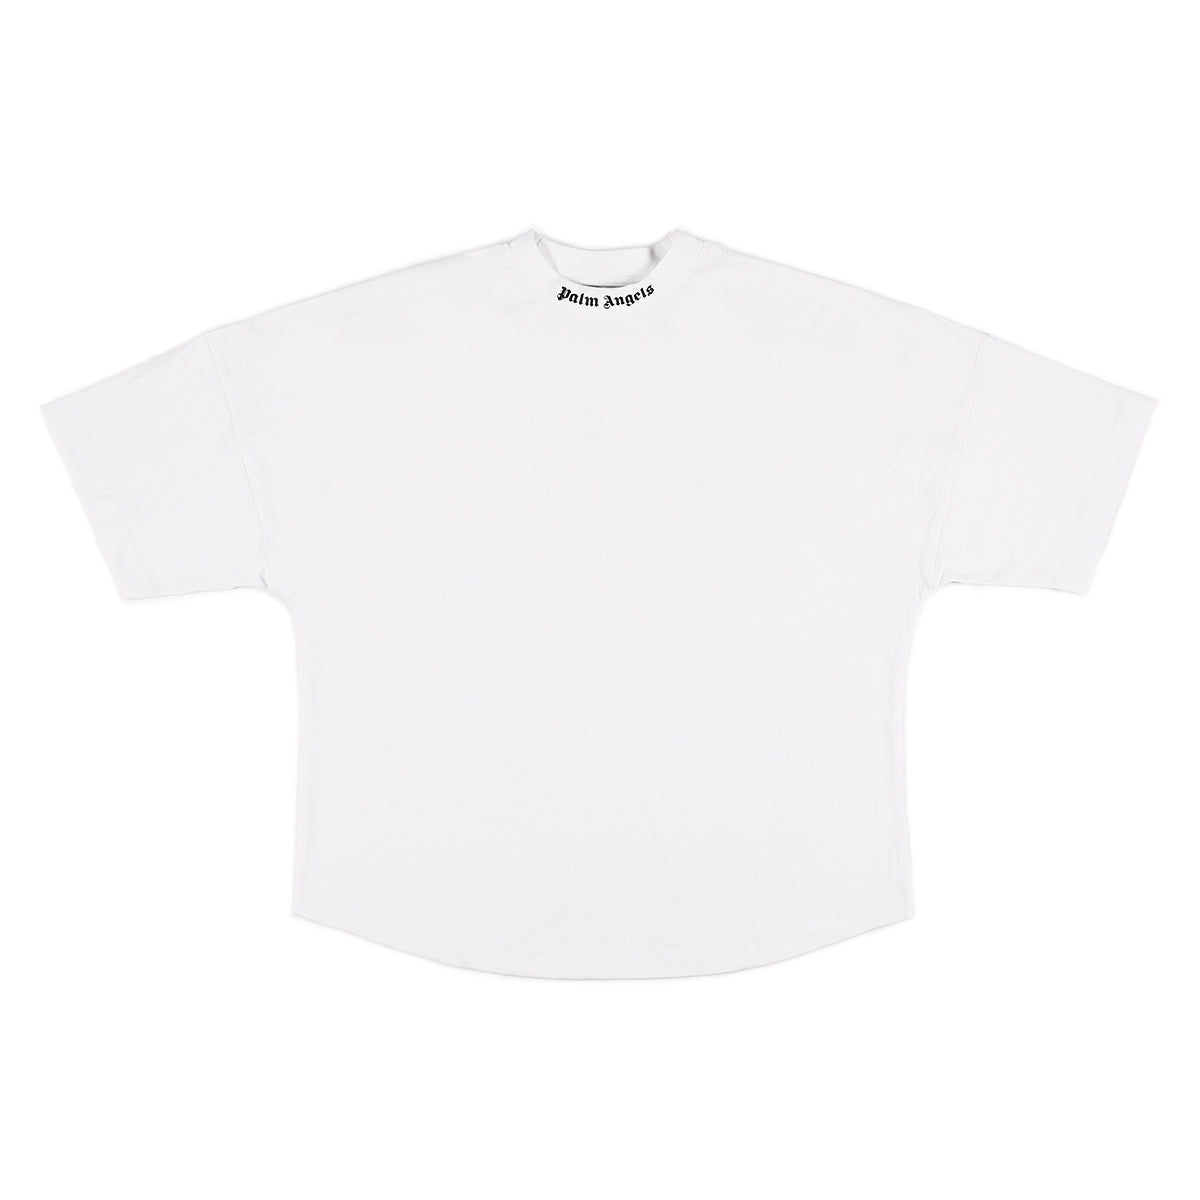 Black and White T-shirt